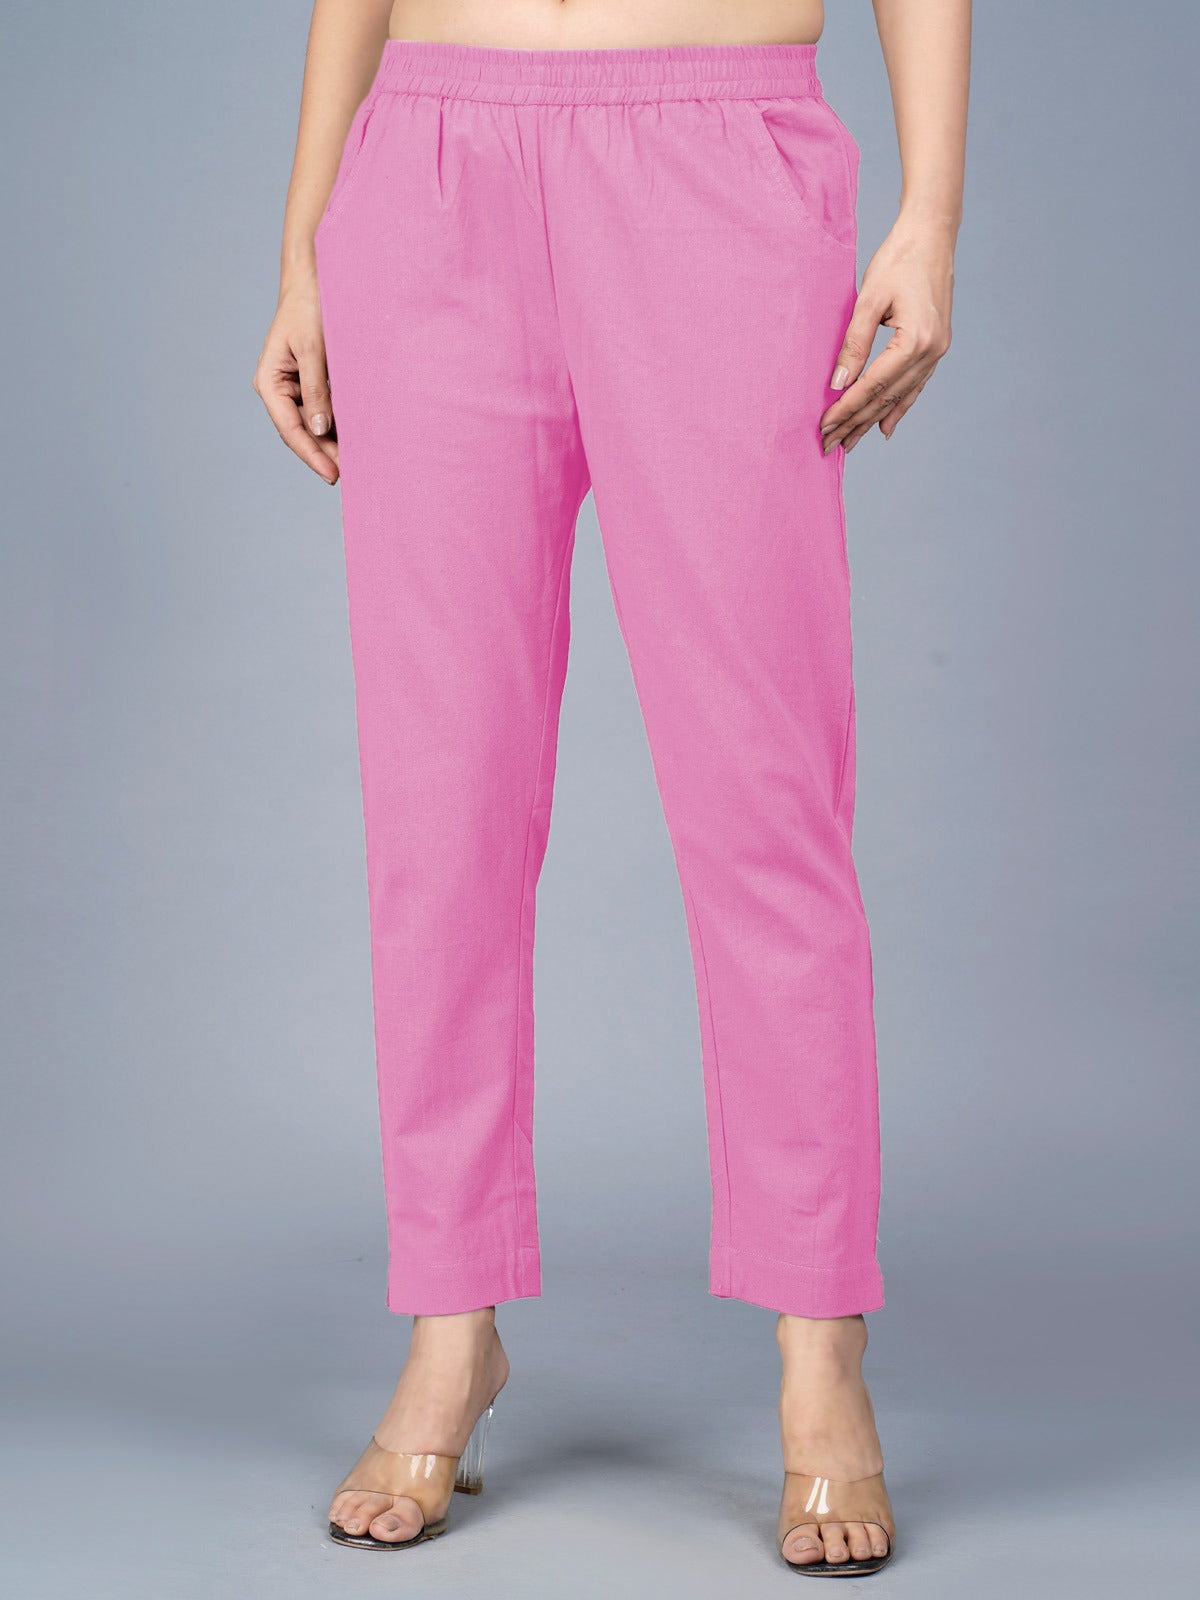 Women's Pink Regular Fit Elastic Cotton Trouser